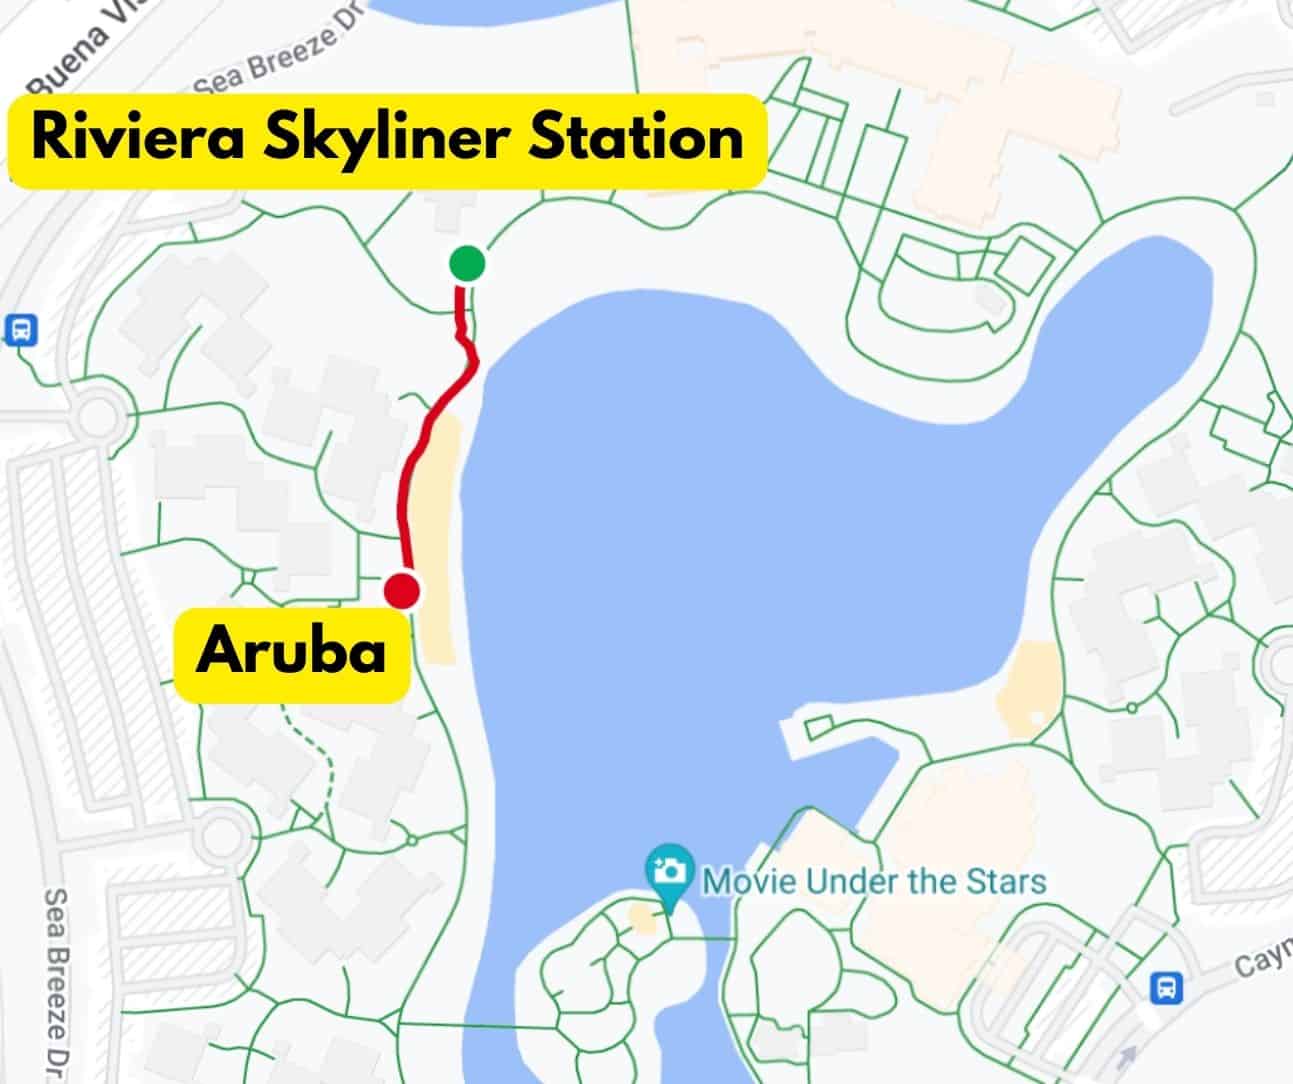 Walking distance from Aruba to Riviera Skyliner Station 